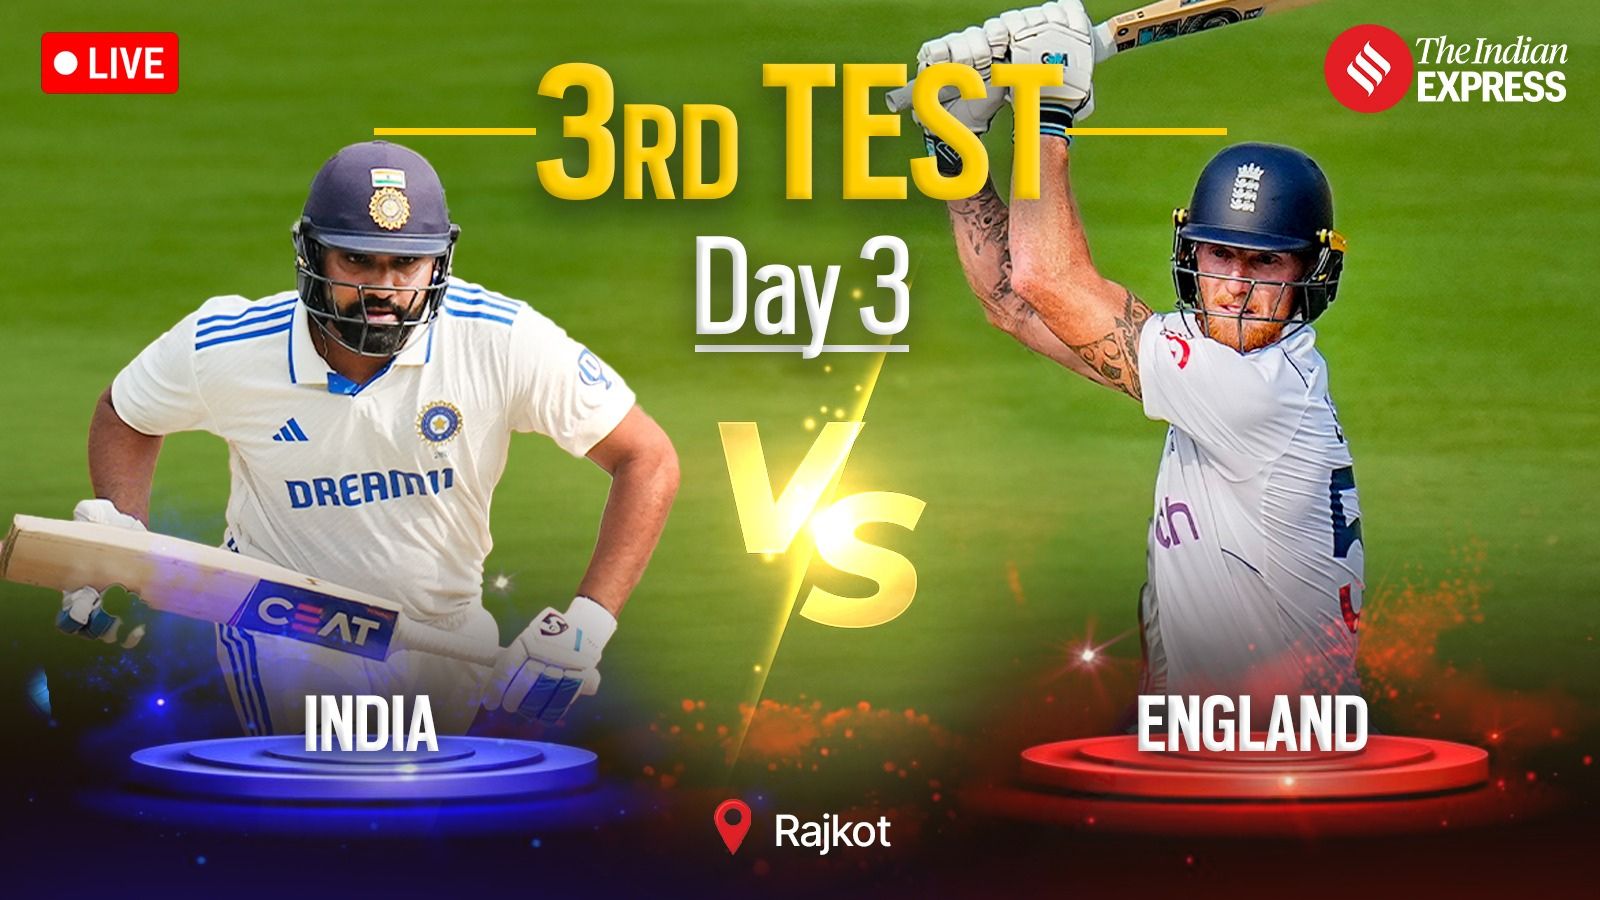 India vs England Live Score: IND vs ENG 3rd Test Day 3 Live Cricket Score from Saurashtra Cricket Association Stadium, Rajkot